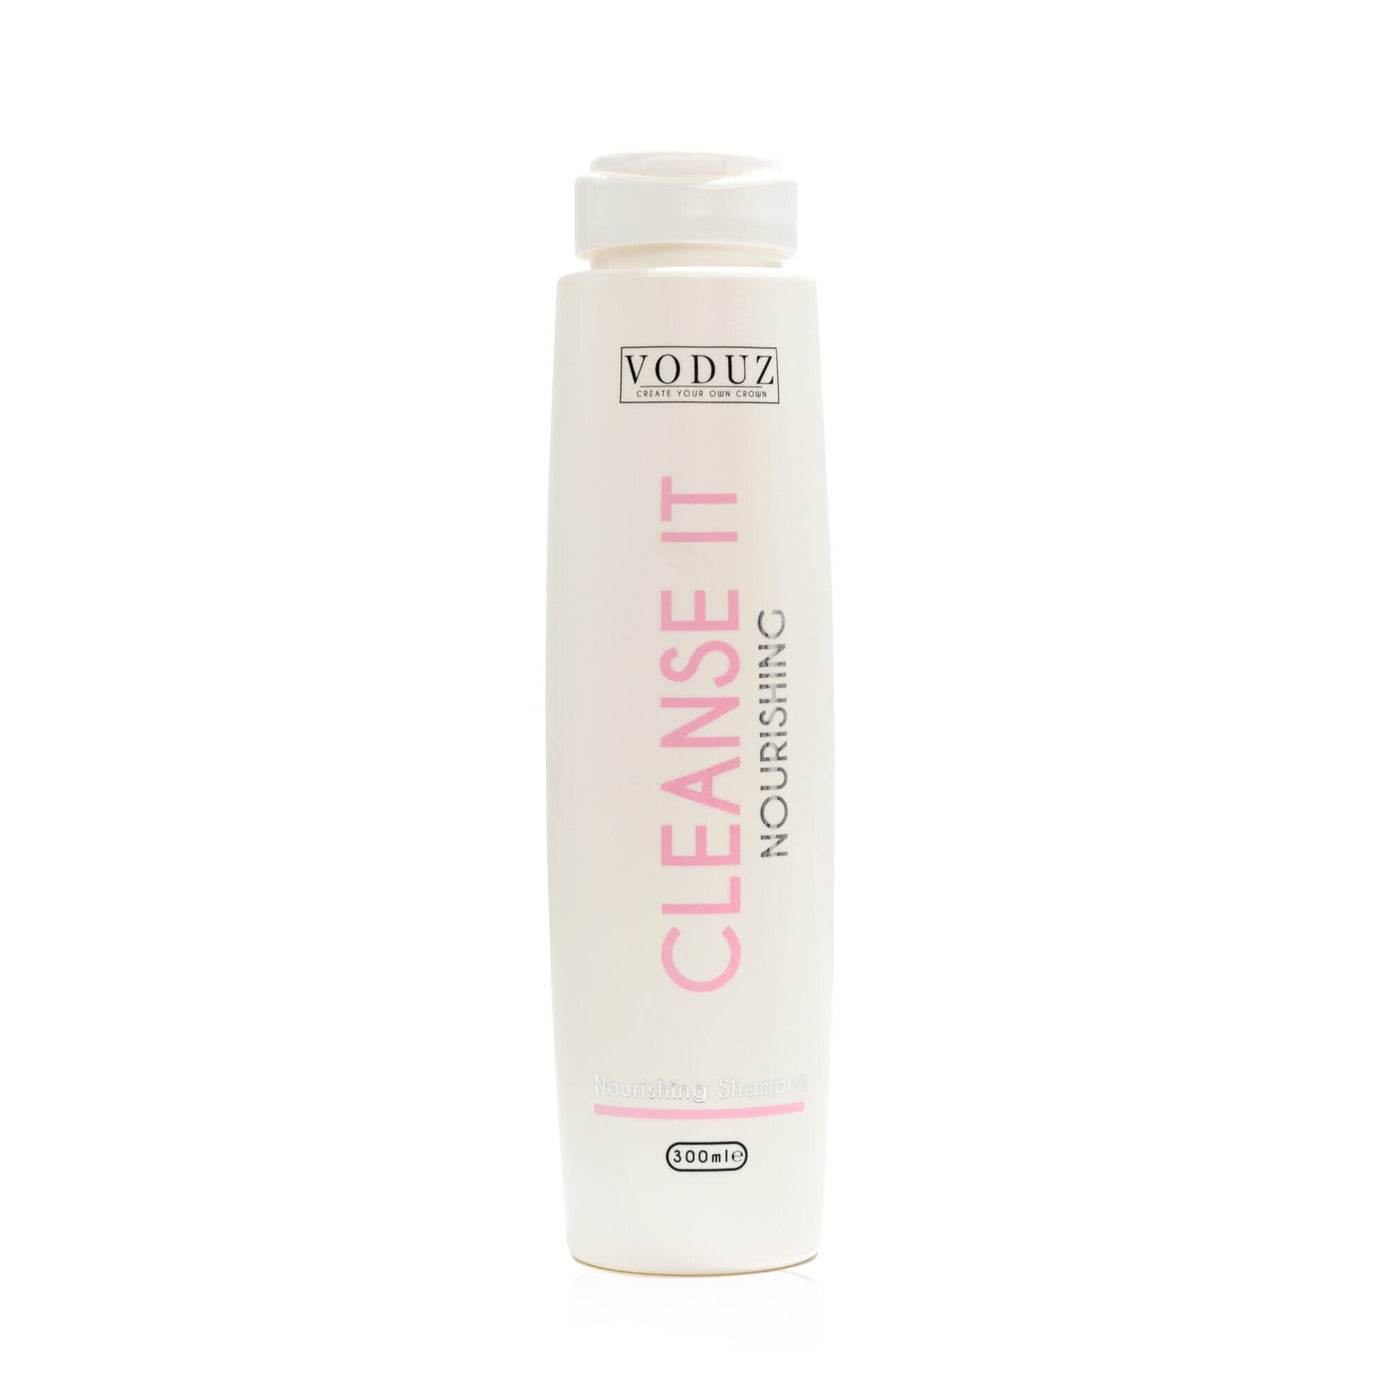 'Cleanse It' - Nourishing Shampoo (300ml)